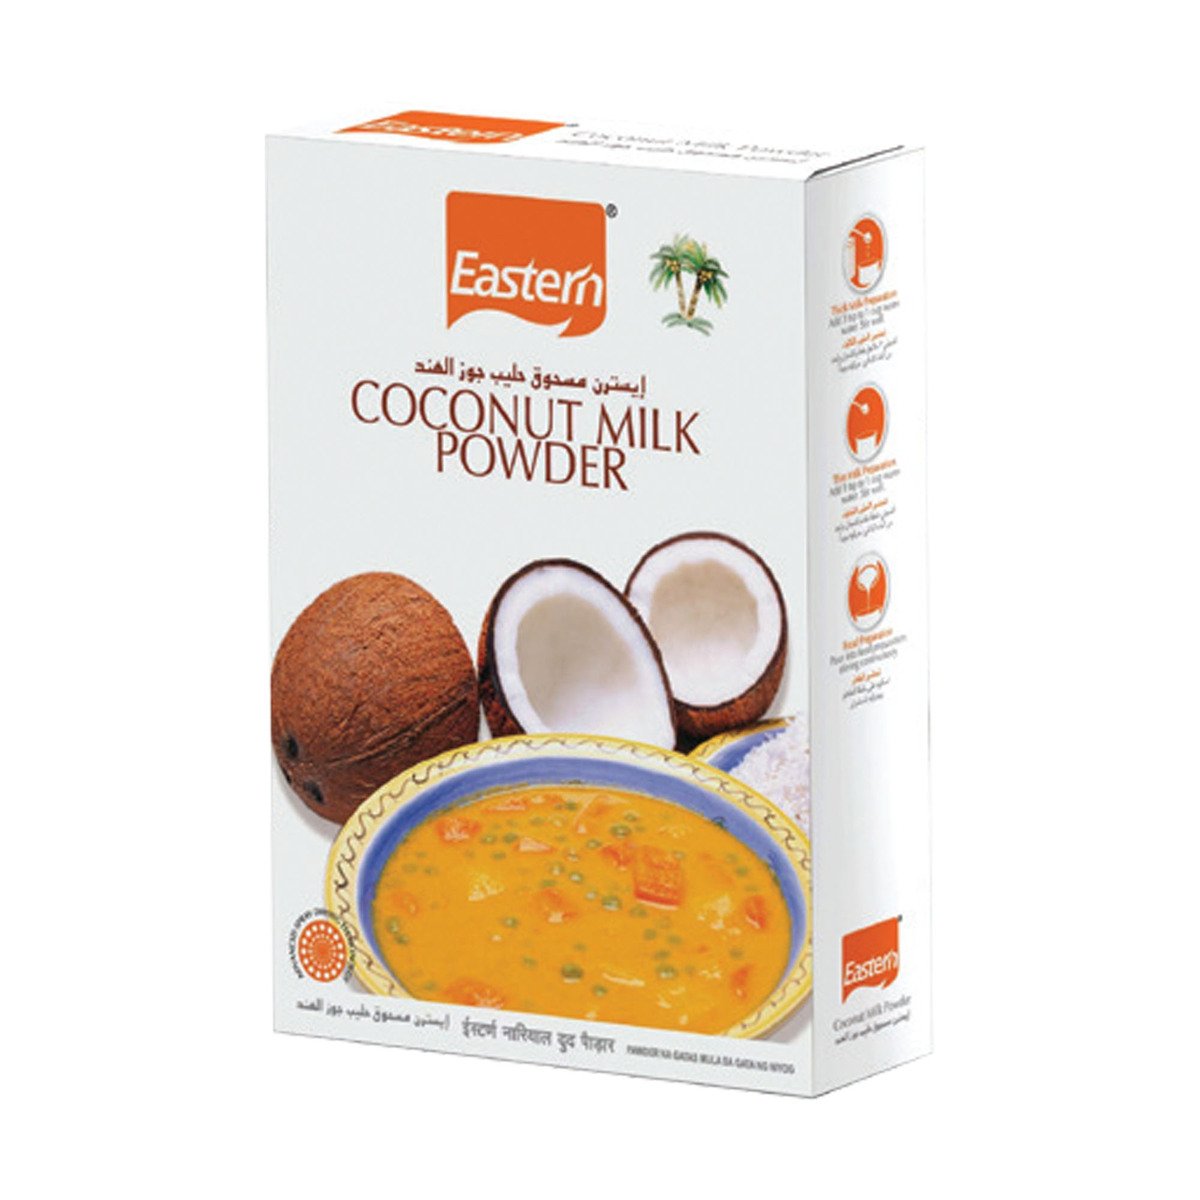 Eastern Coconut Milk Powder Value Pack 2 x 250 g